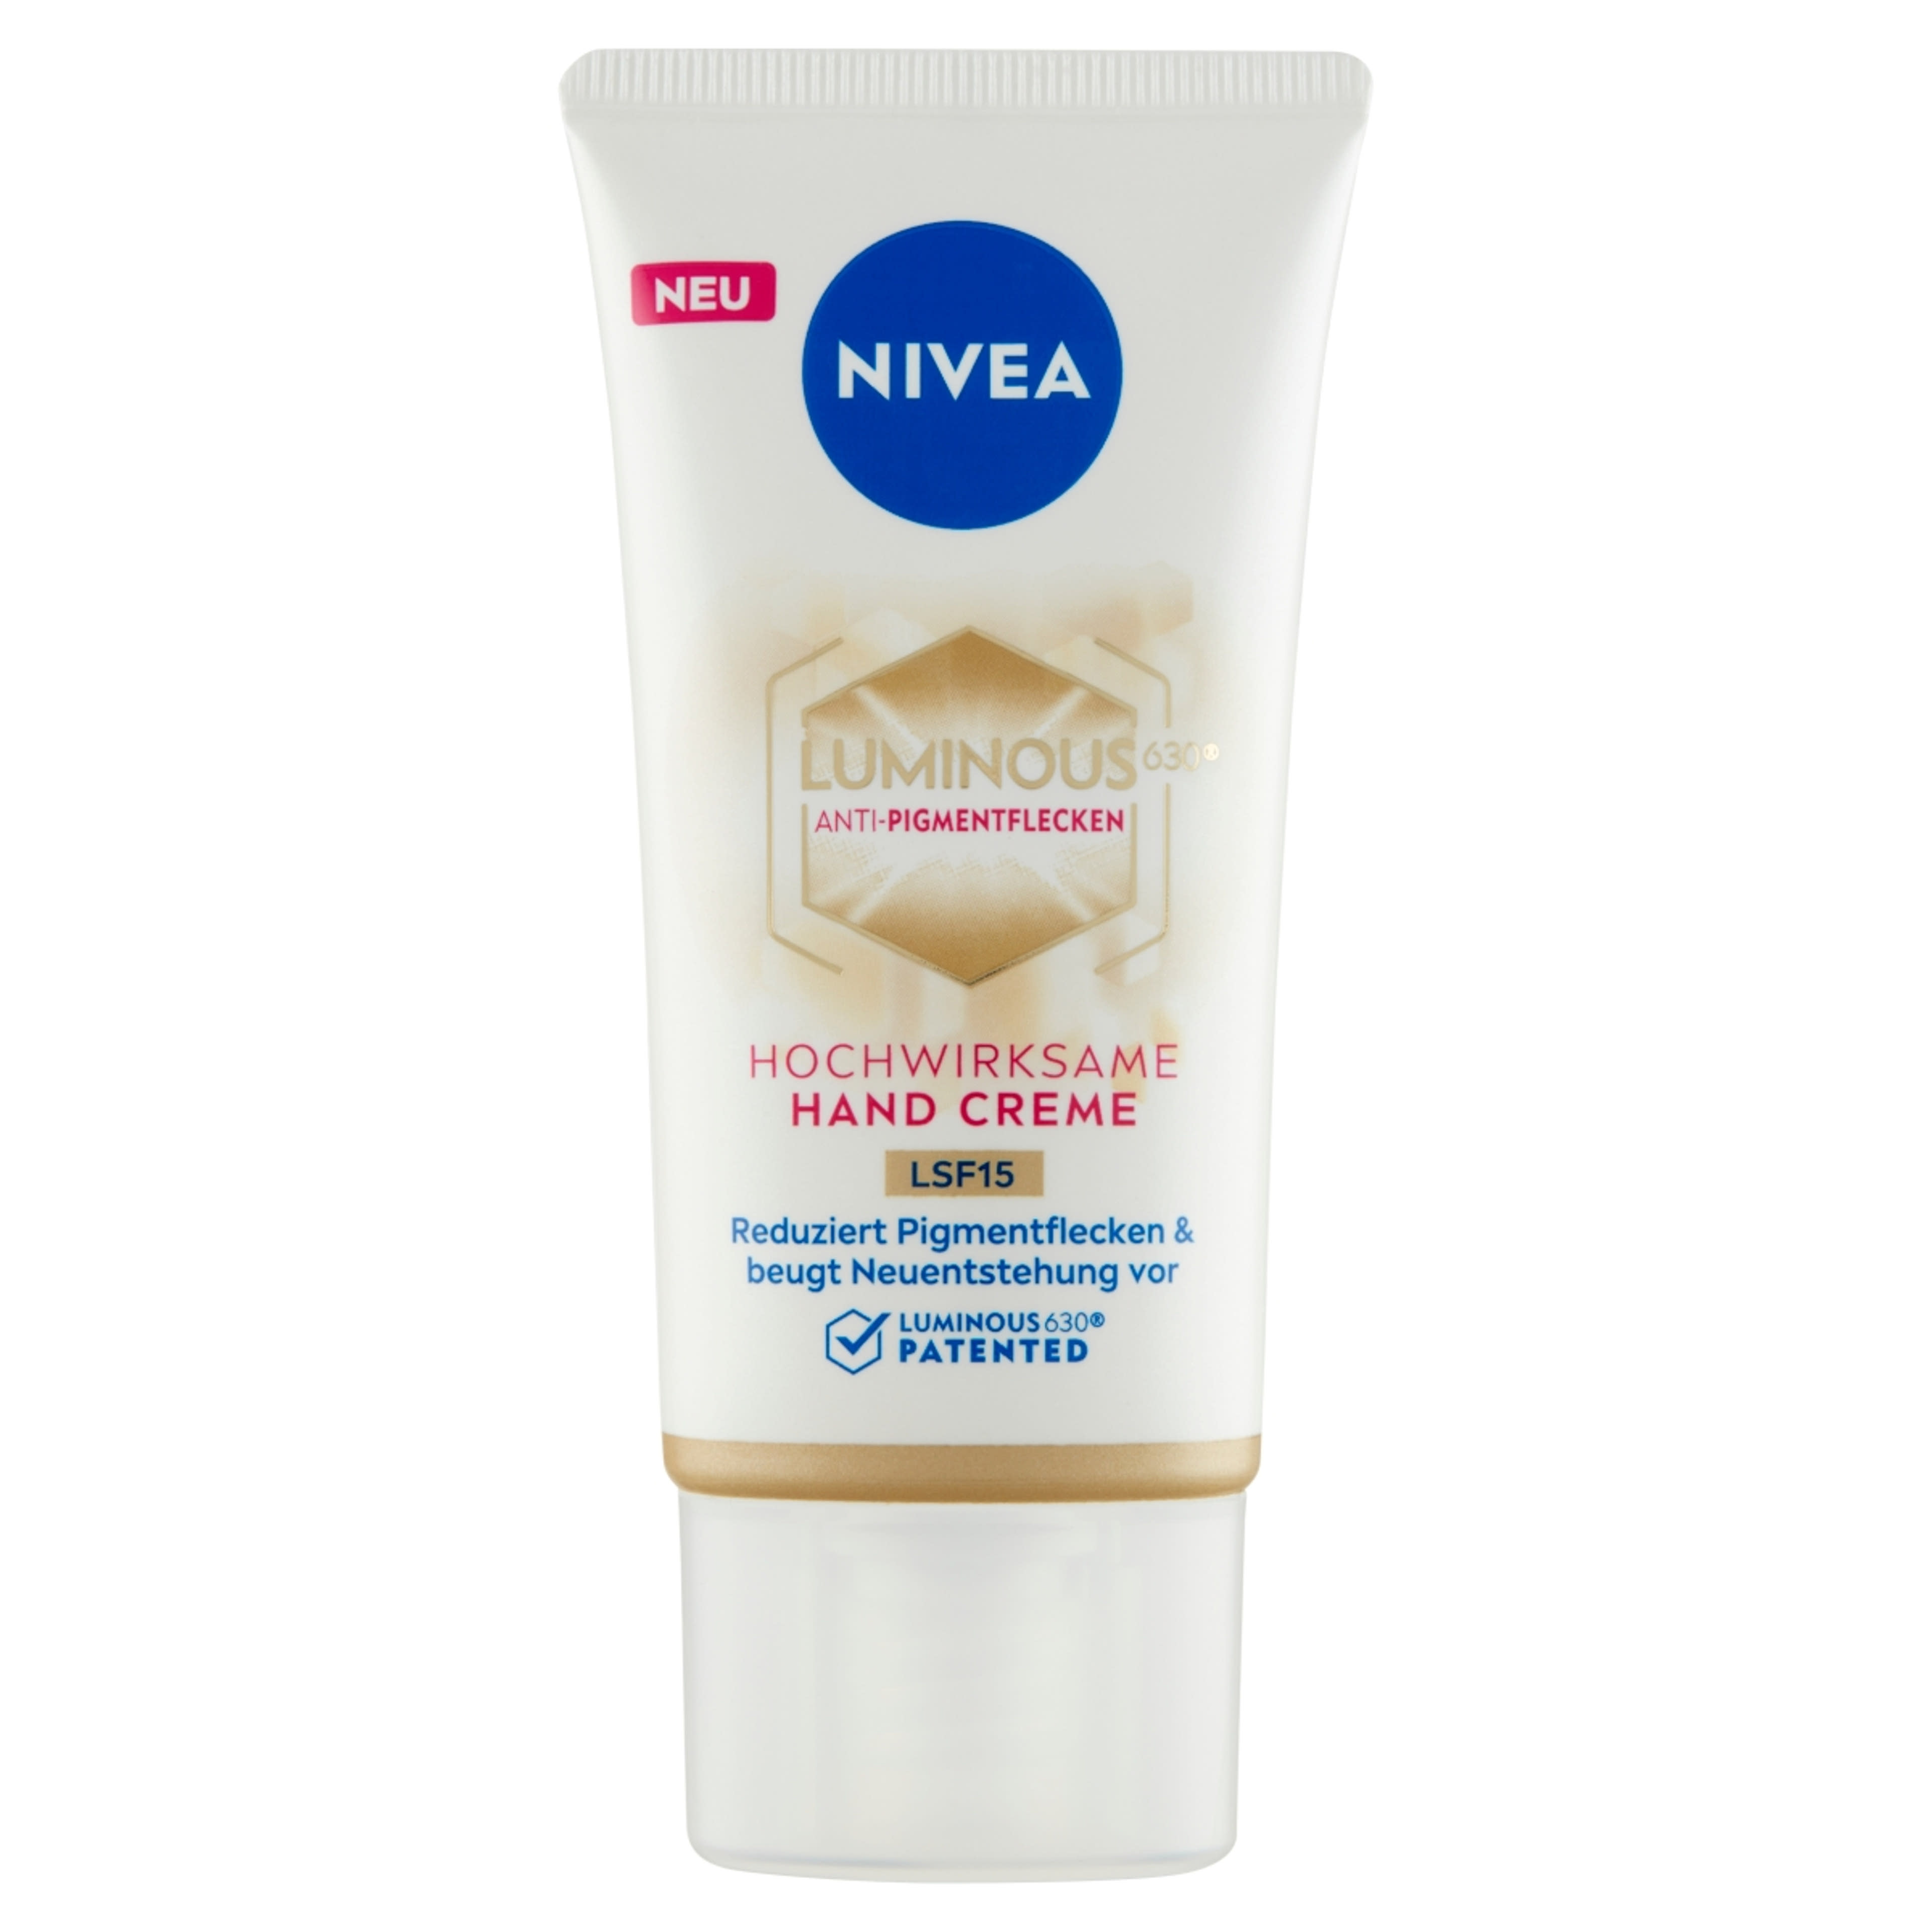 Nivea Luminous 630 pigmentfoltok elleni kézkrém - 50 ml